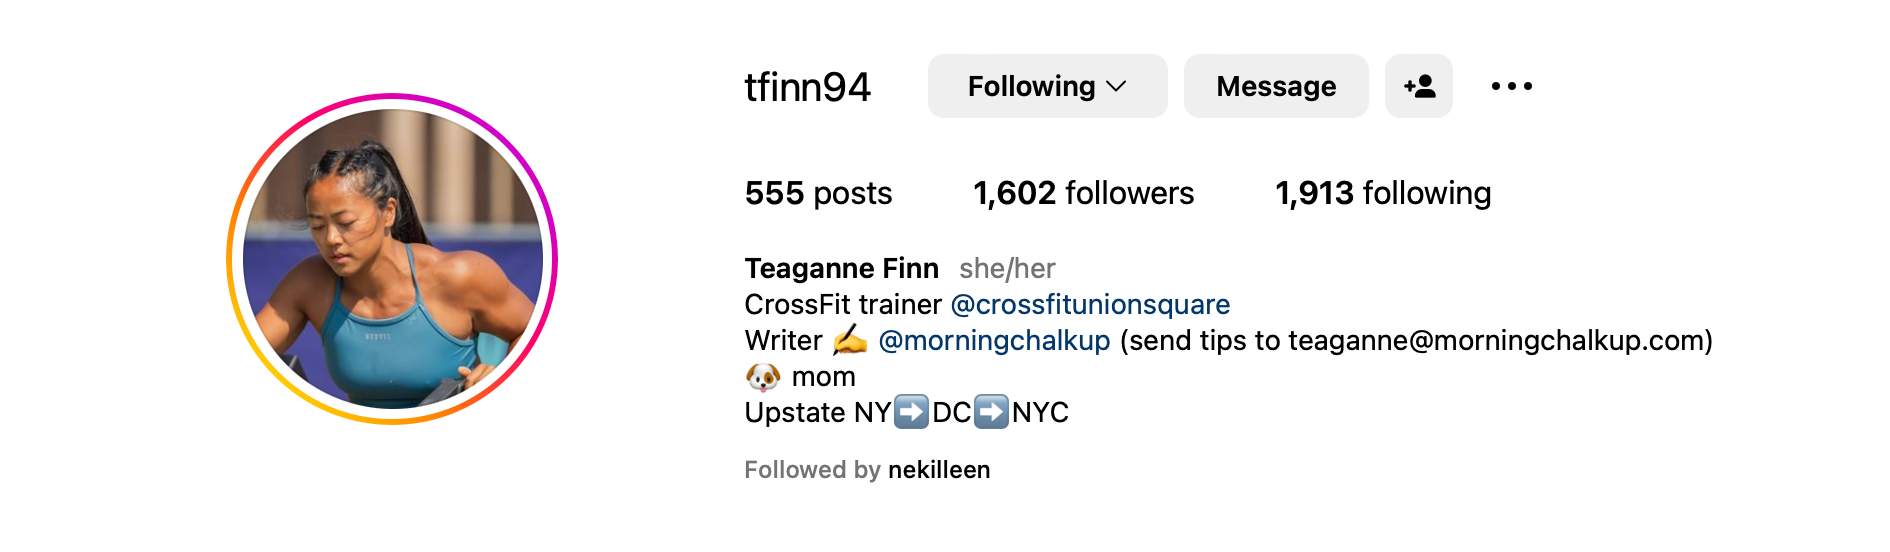 Teaganne Finn Instagram